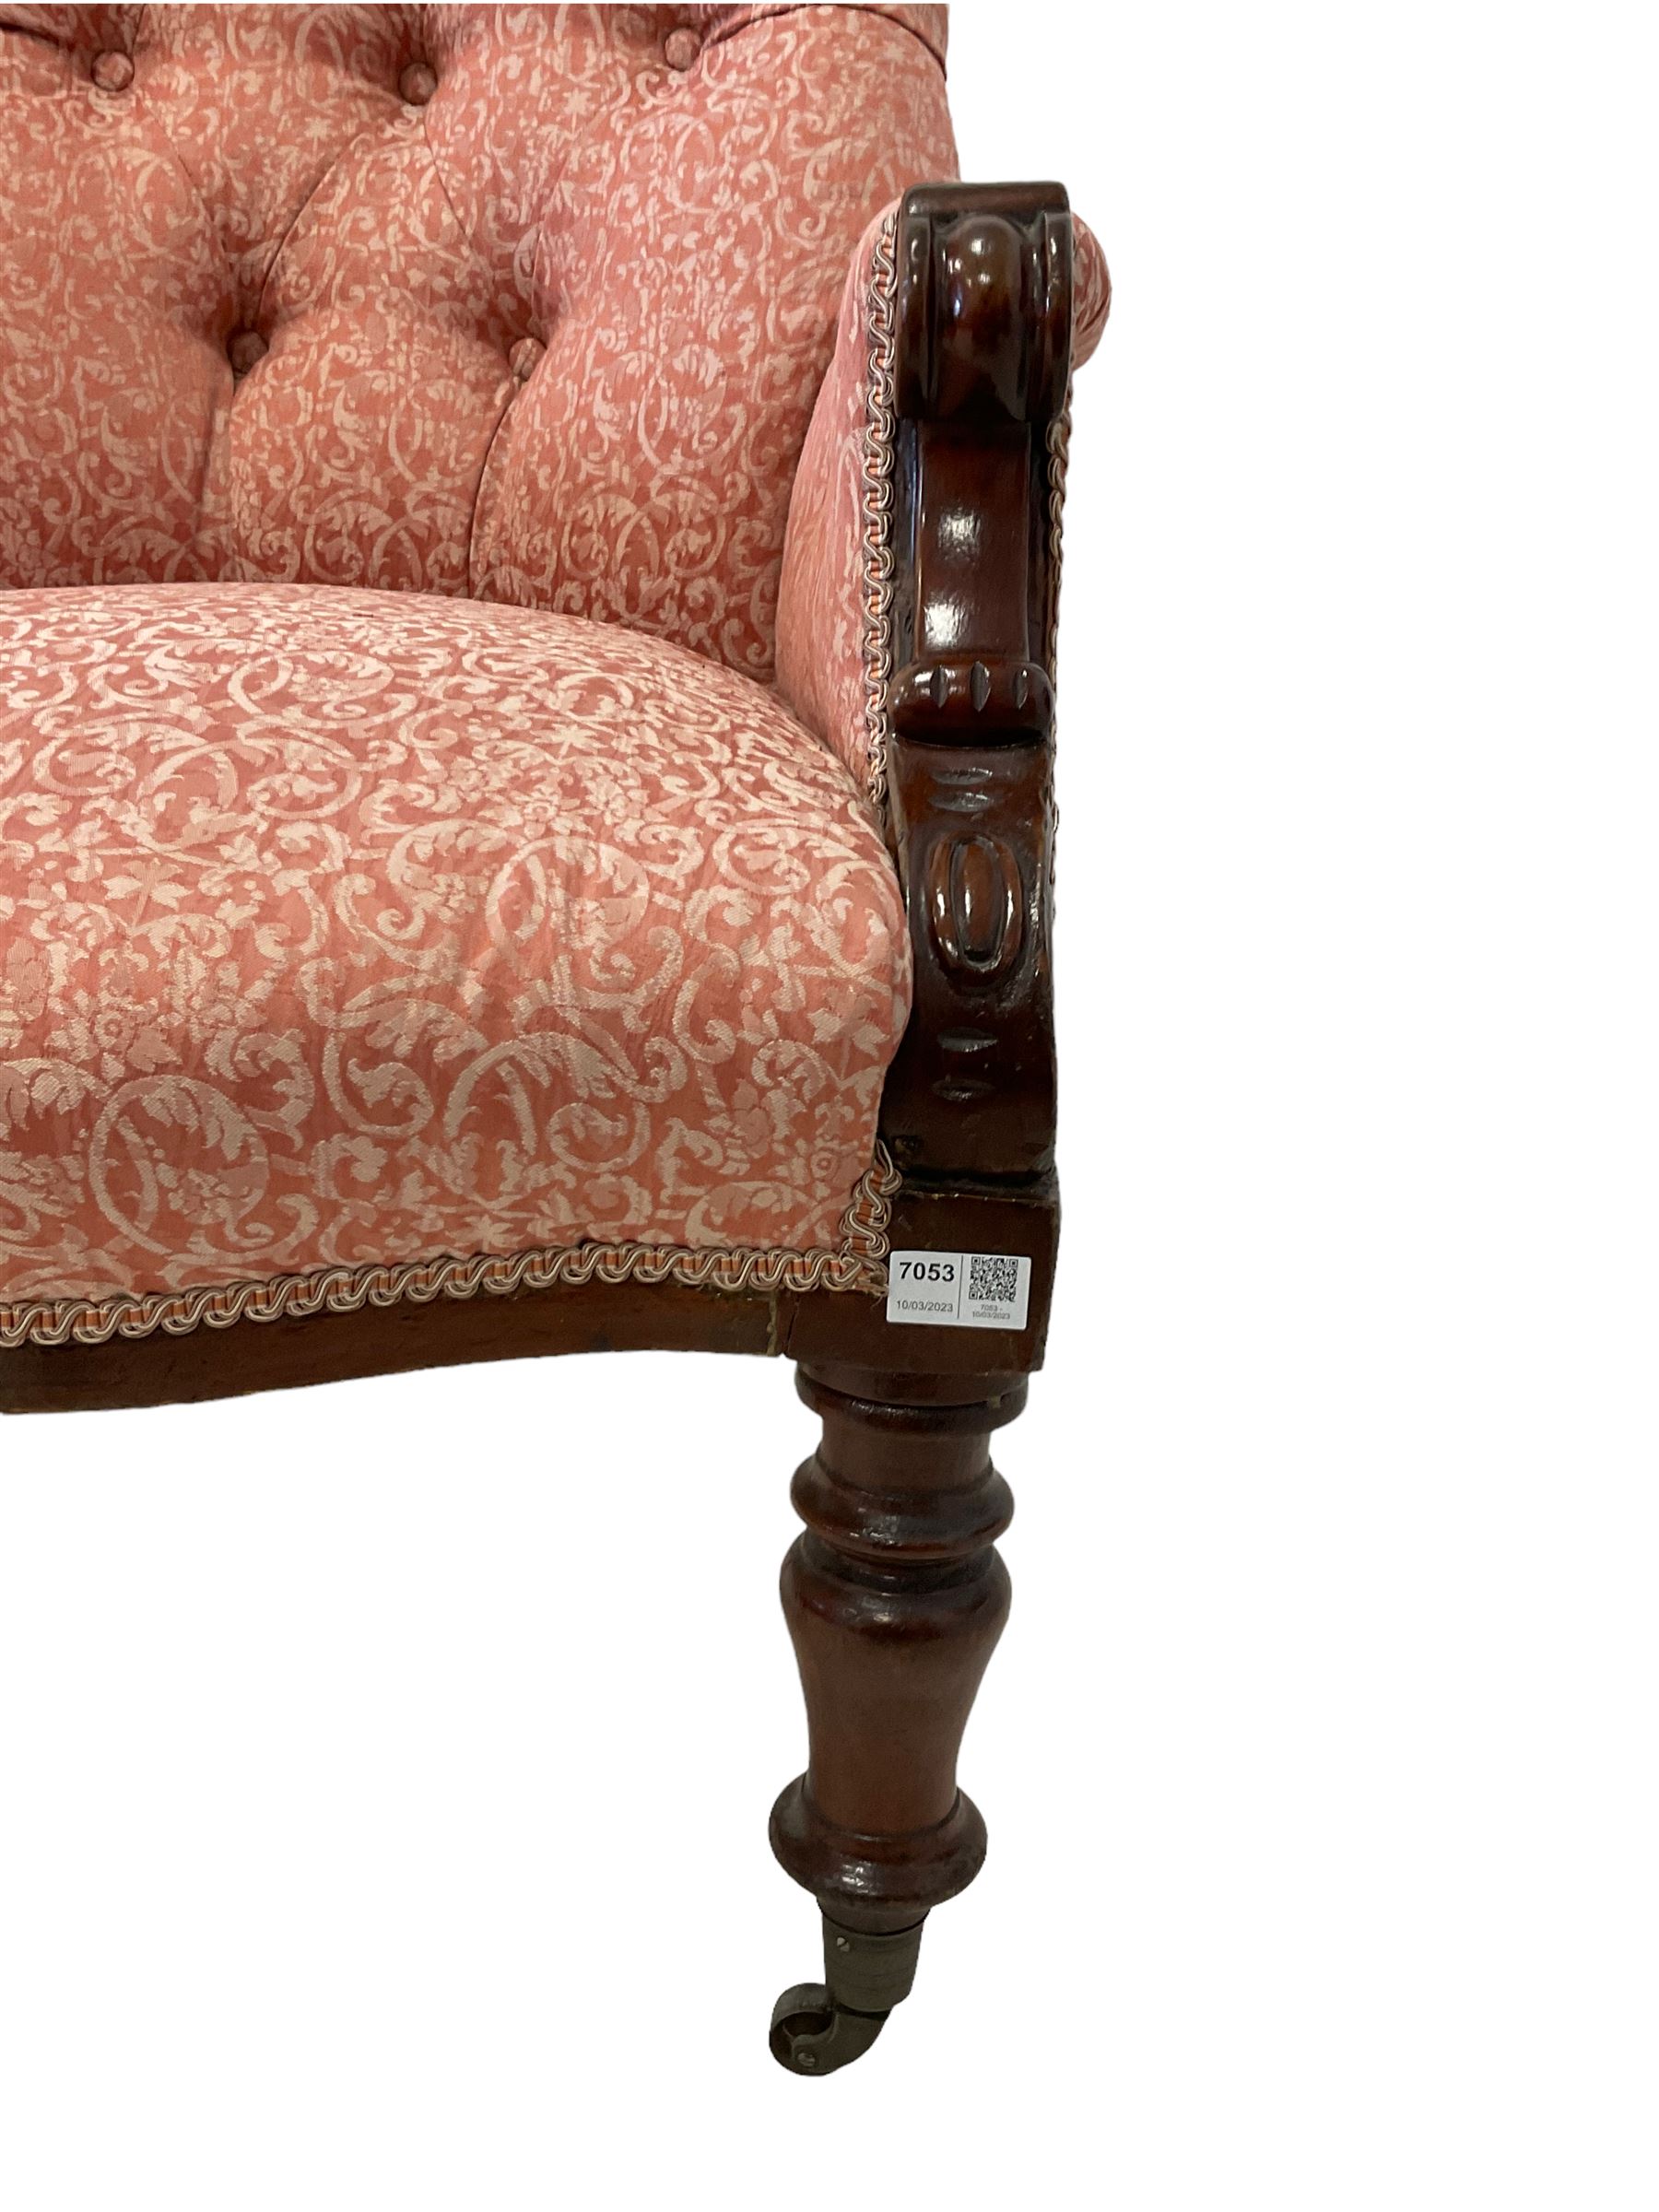 19th century mahogany armchair - Image 6 of 6